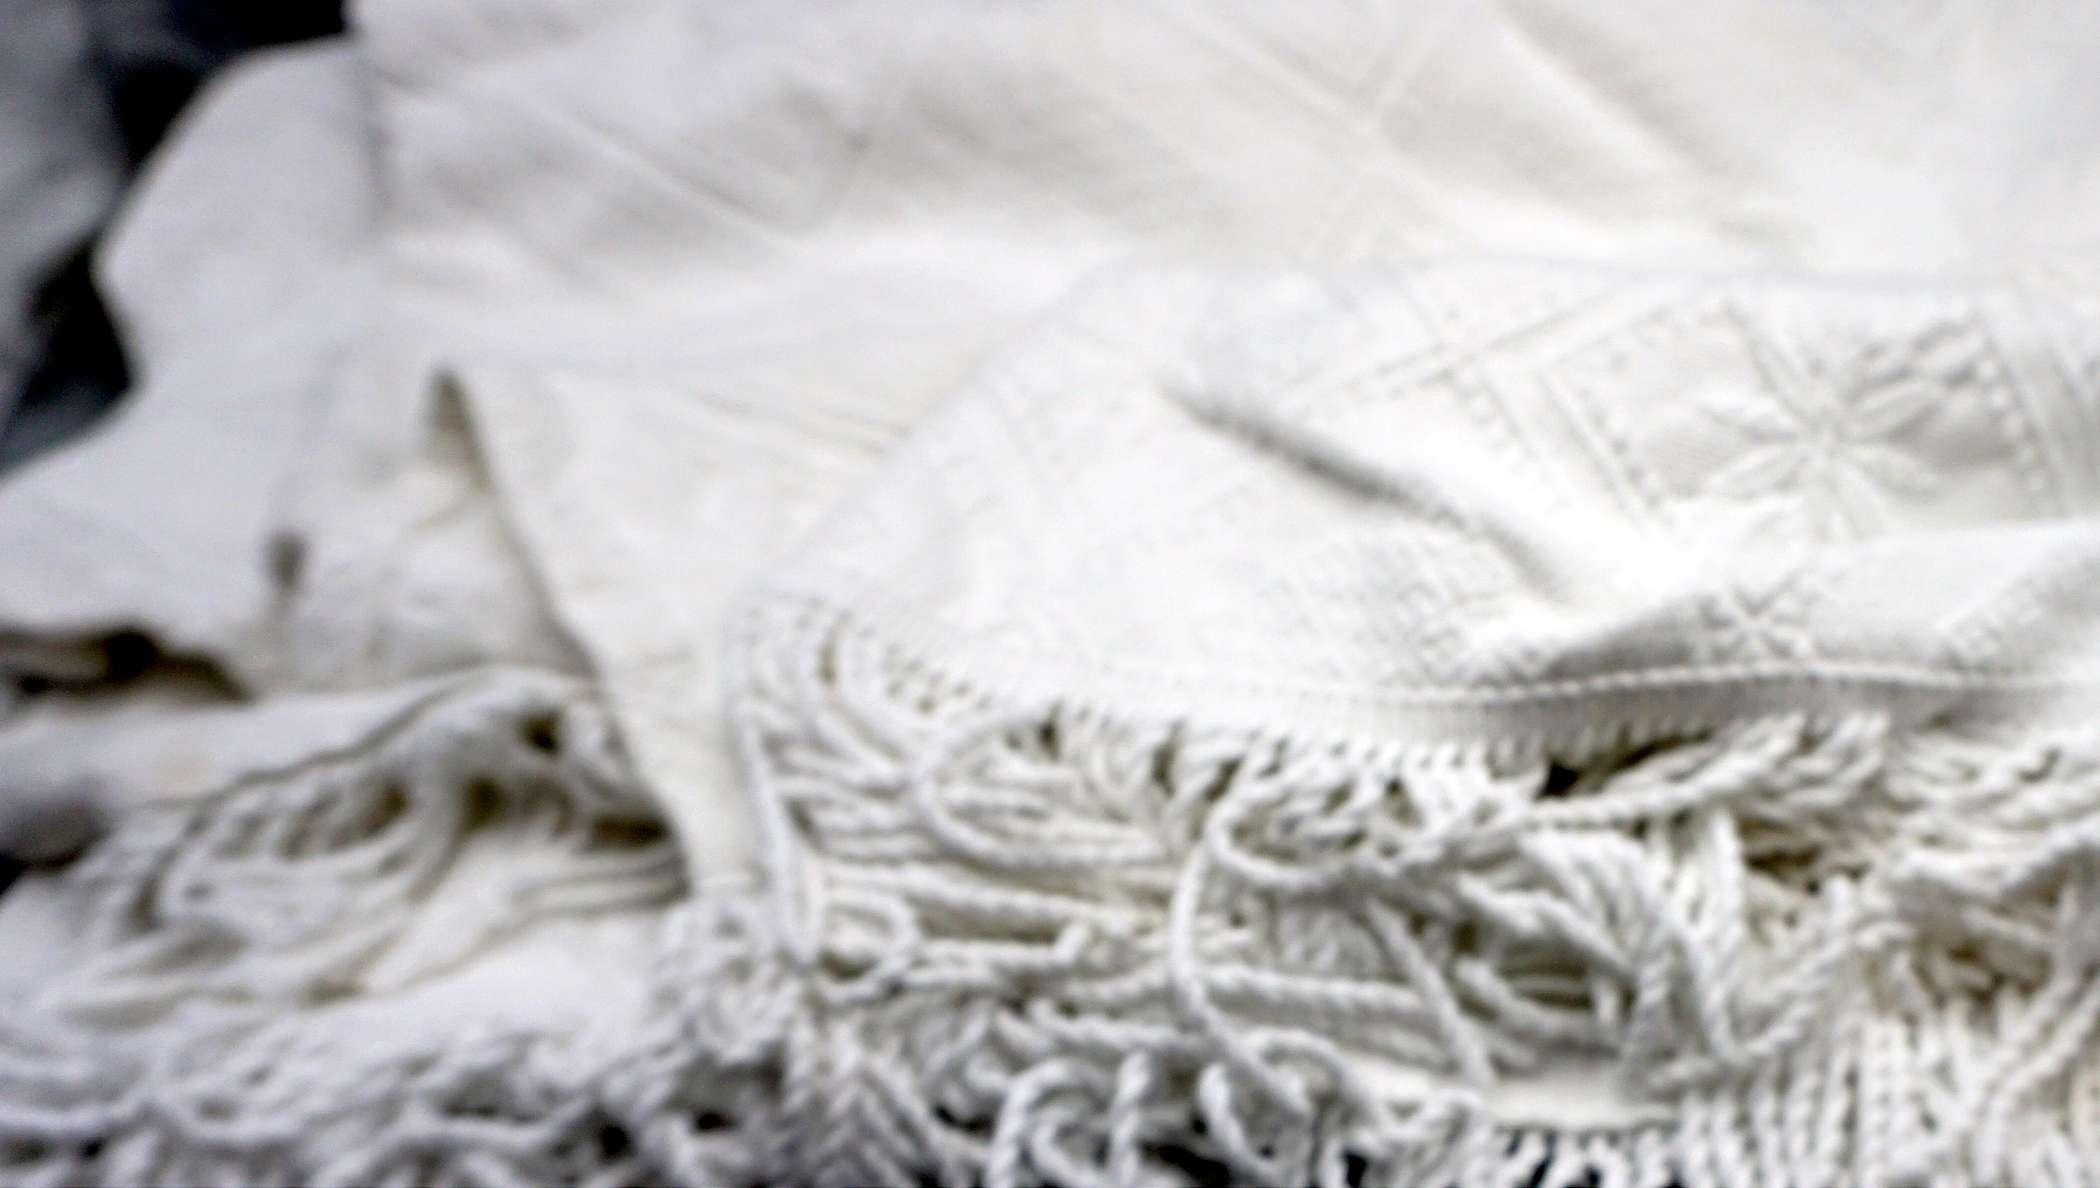 Large White/Cream Blanket